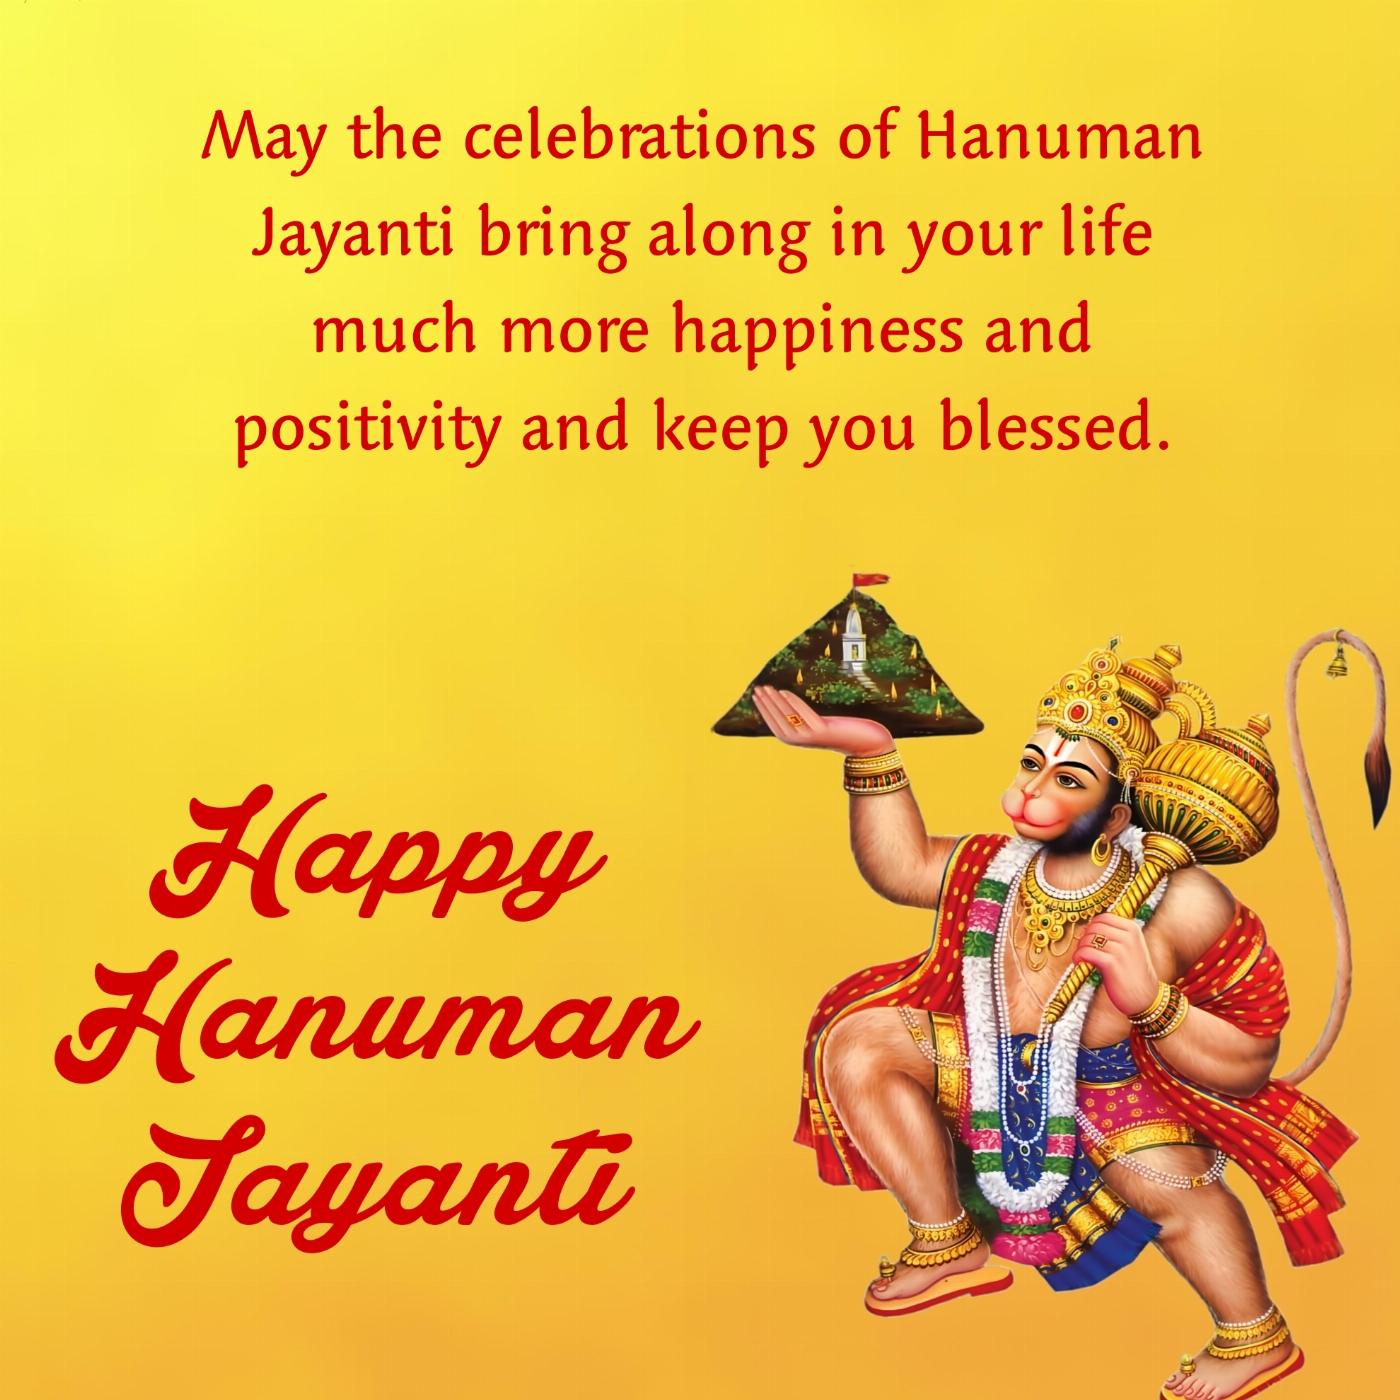 May the celebrations of Hanuman Jayanti bring along in your life